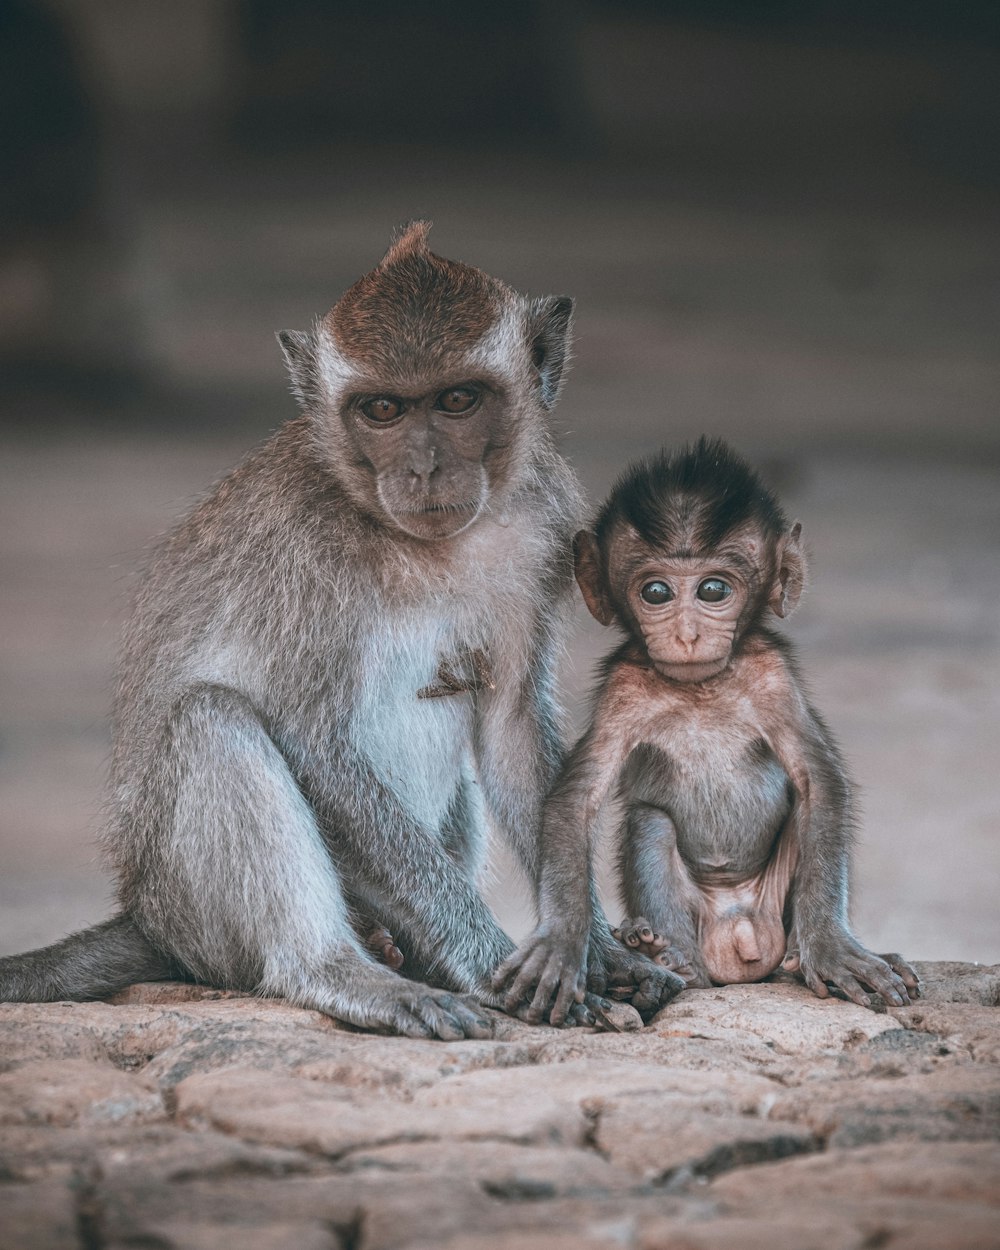 a baby monkey sitting next to an adult monkey